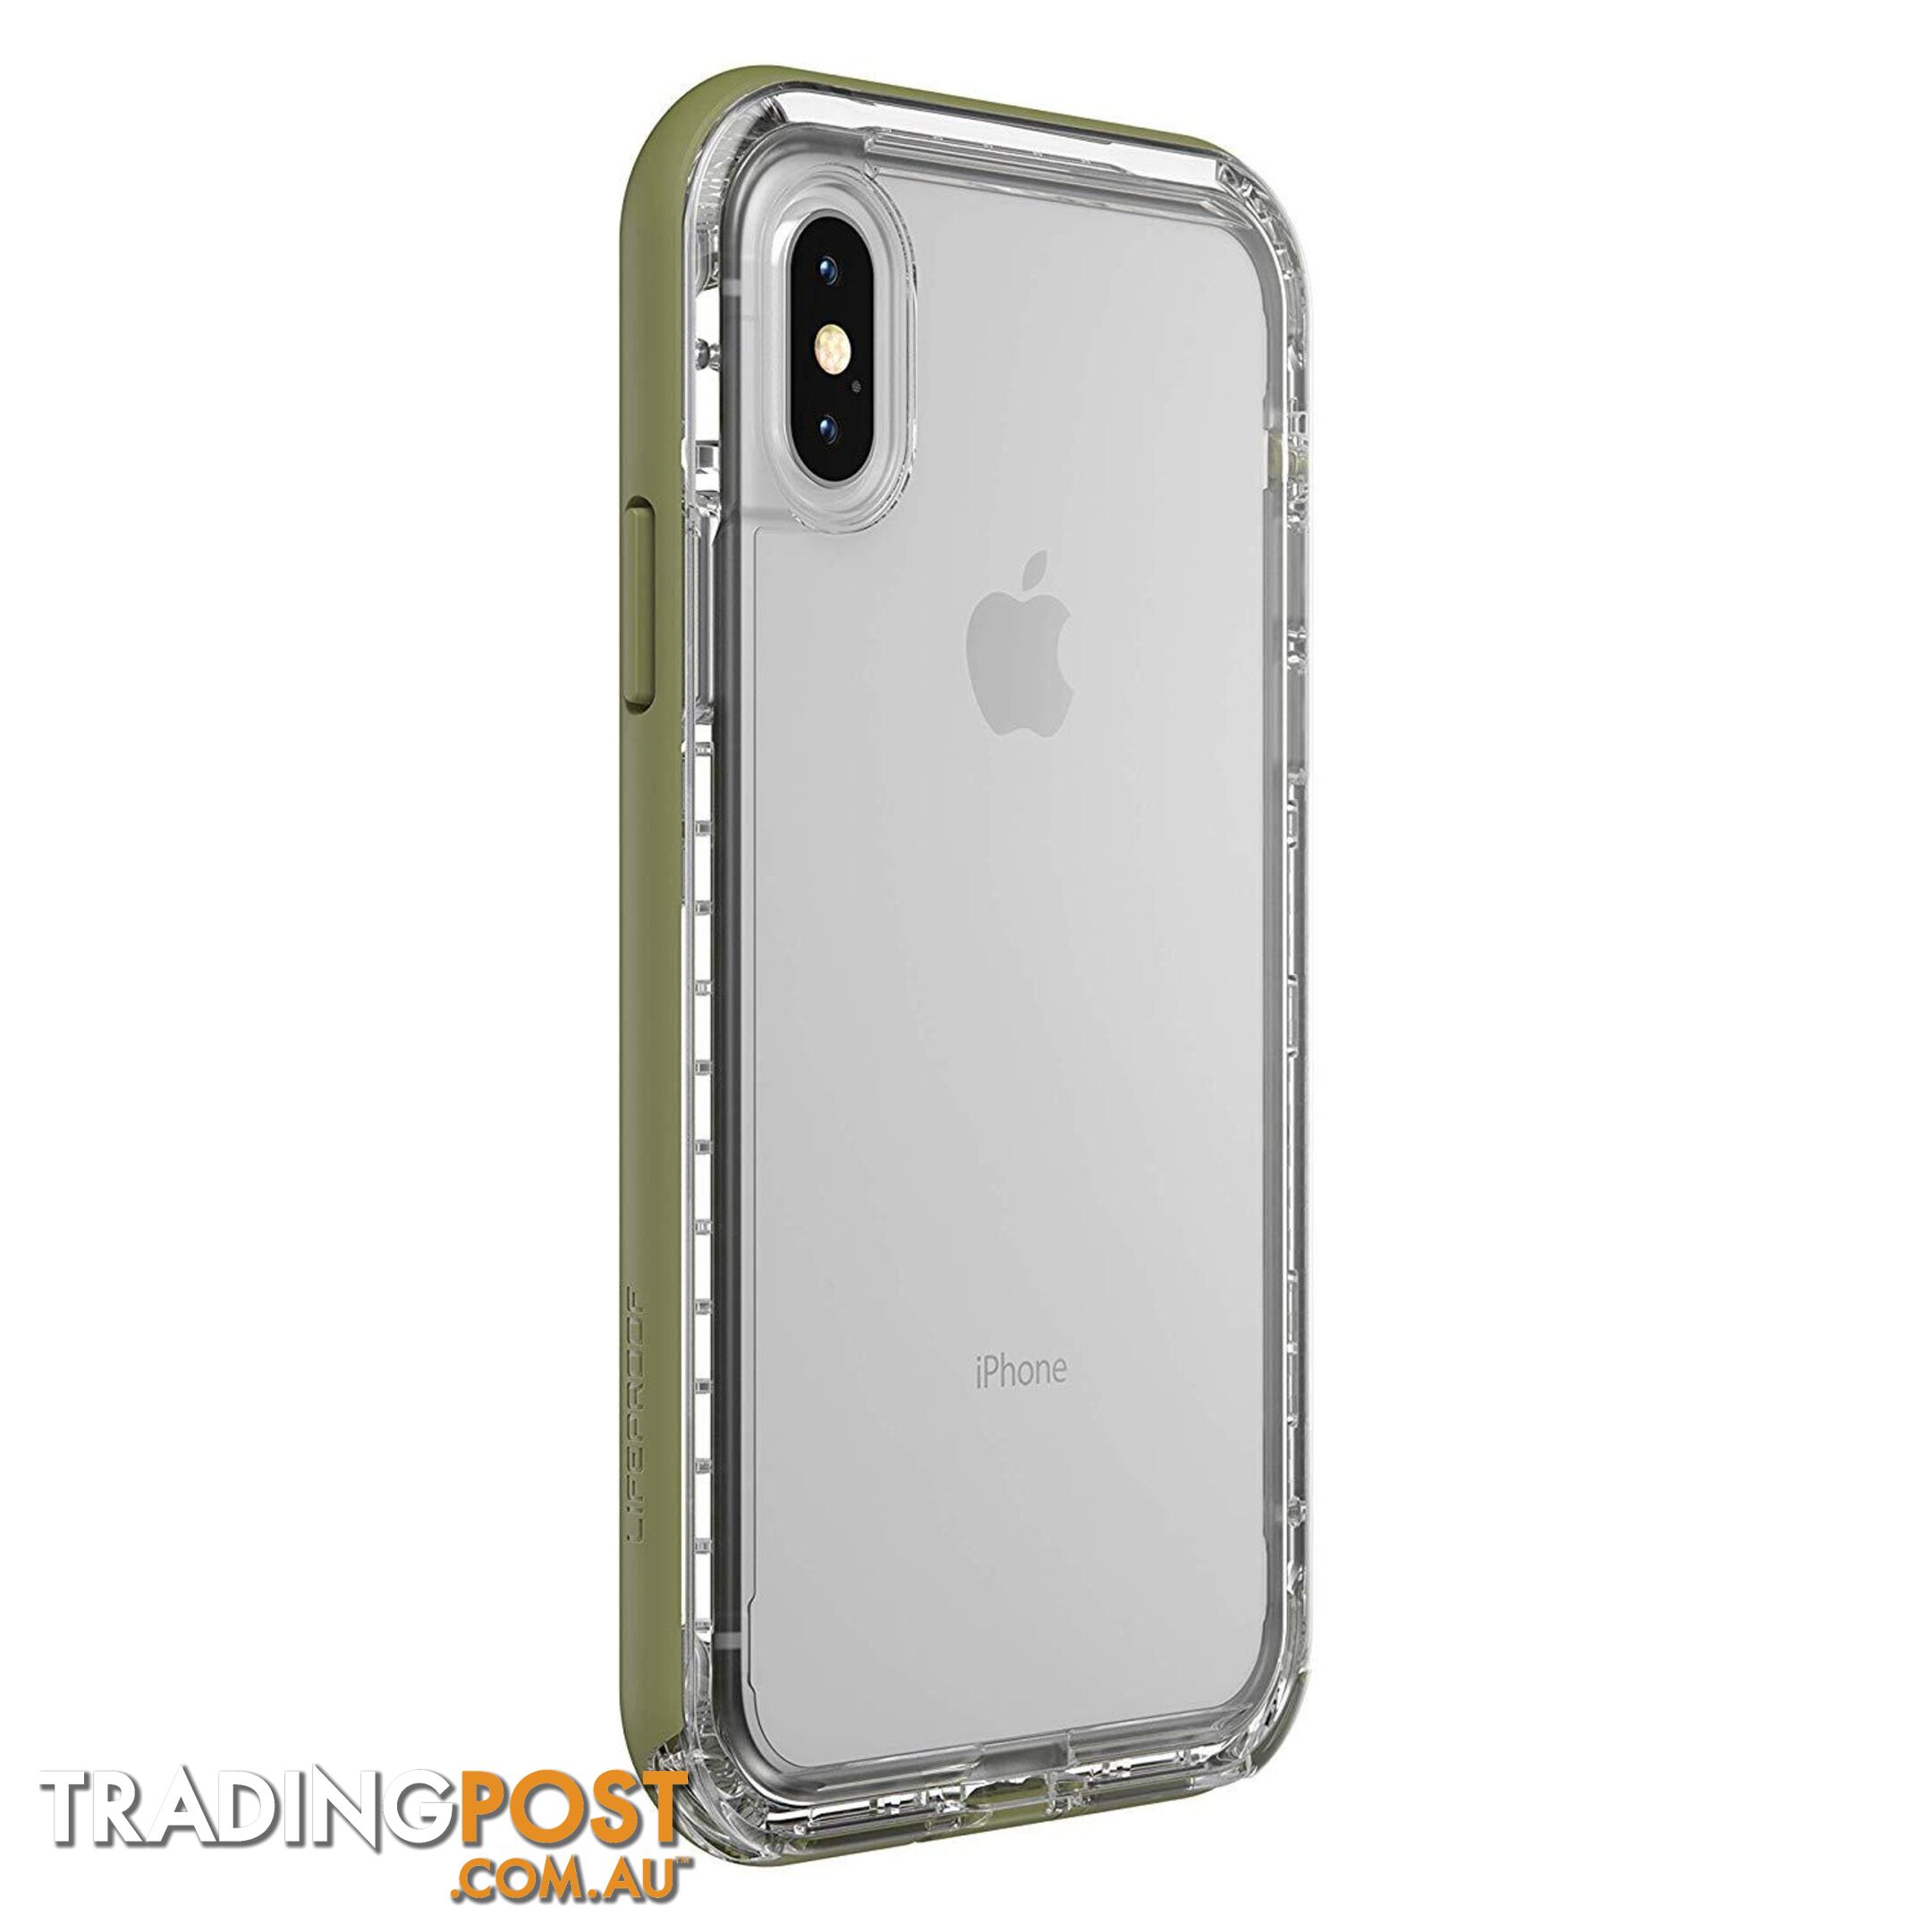 LifeProof Next Case For iPhone X/Xs - LifeProof - Cactus Rose - 660543470472